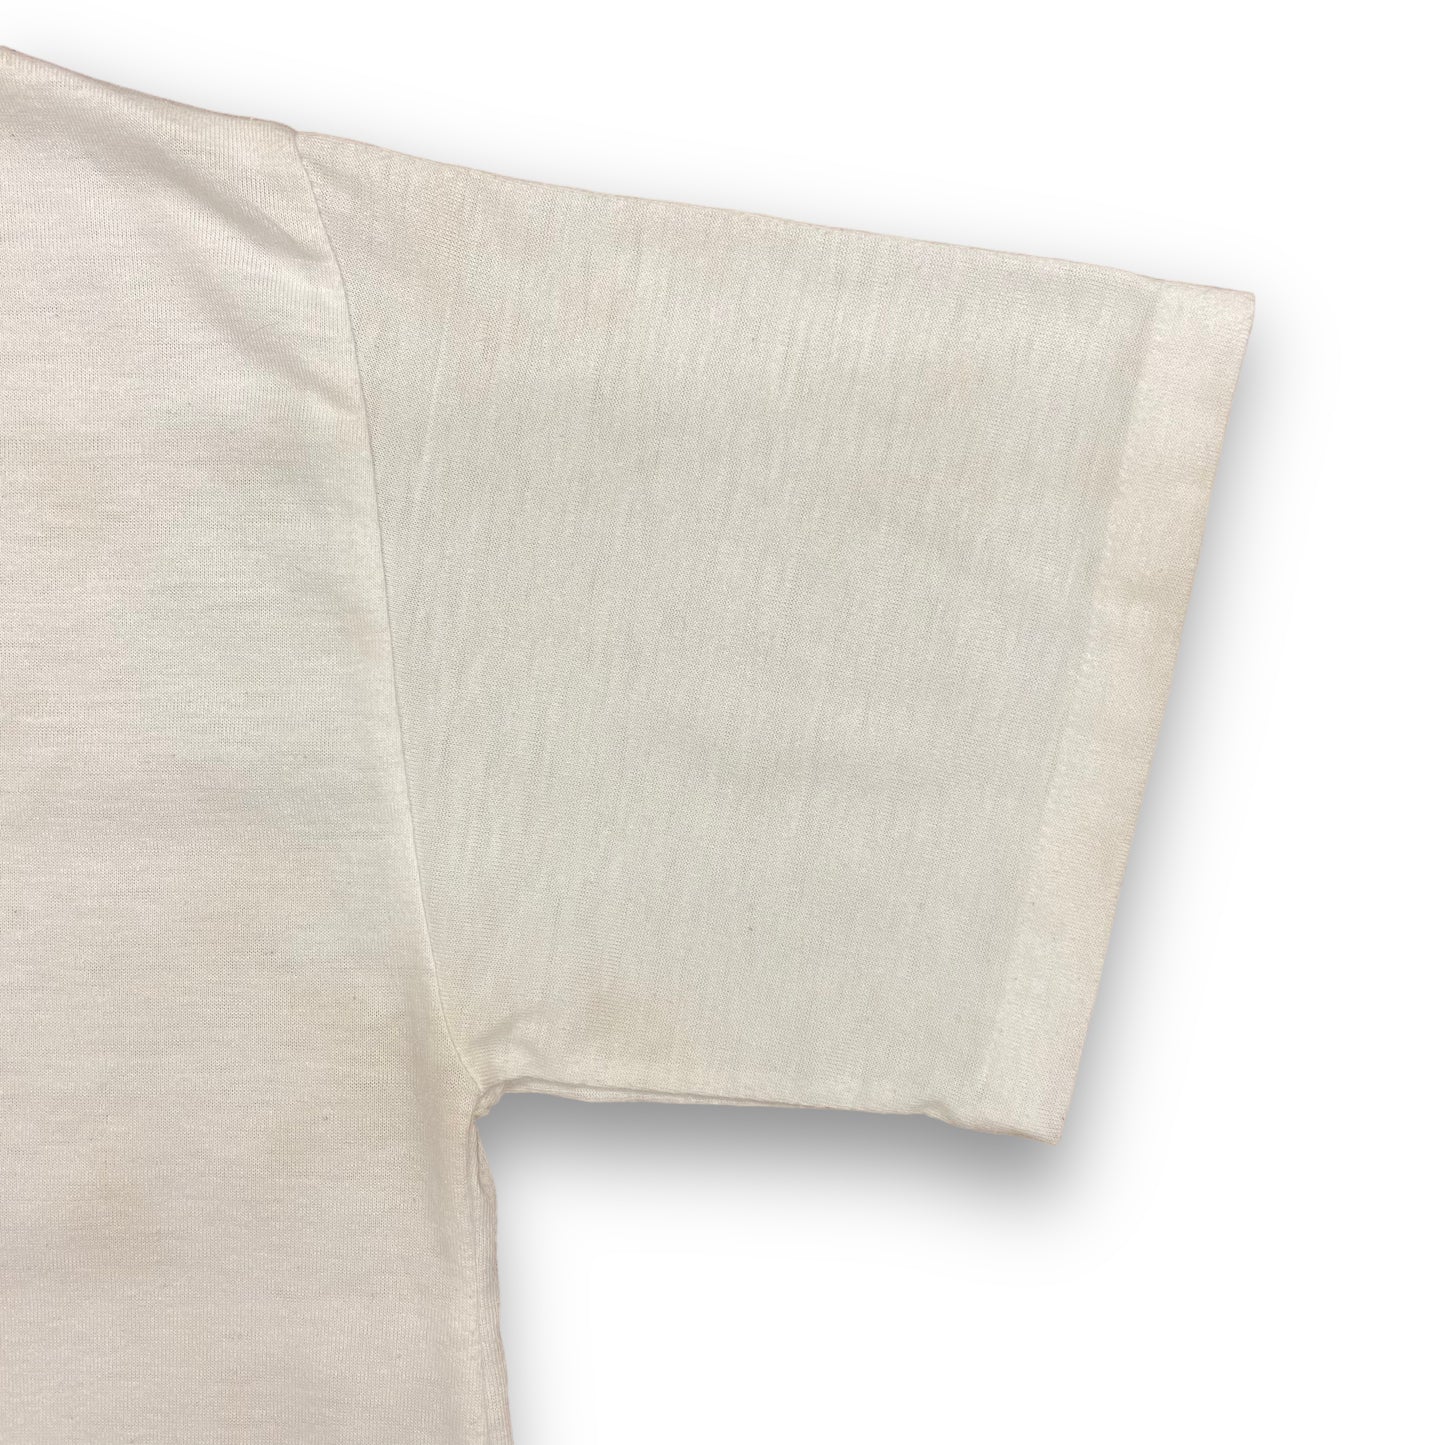 1980s White Single Stitch Blank Tee - Size Large